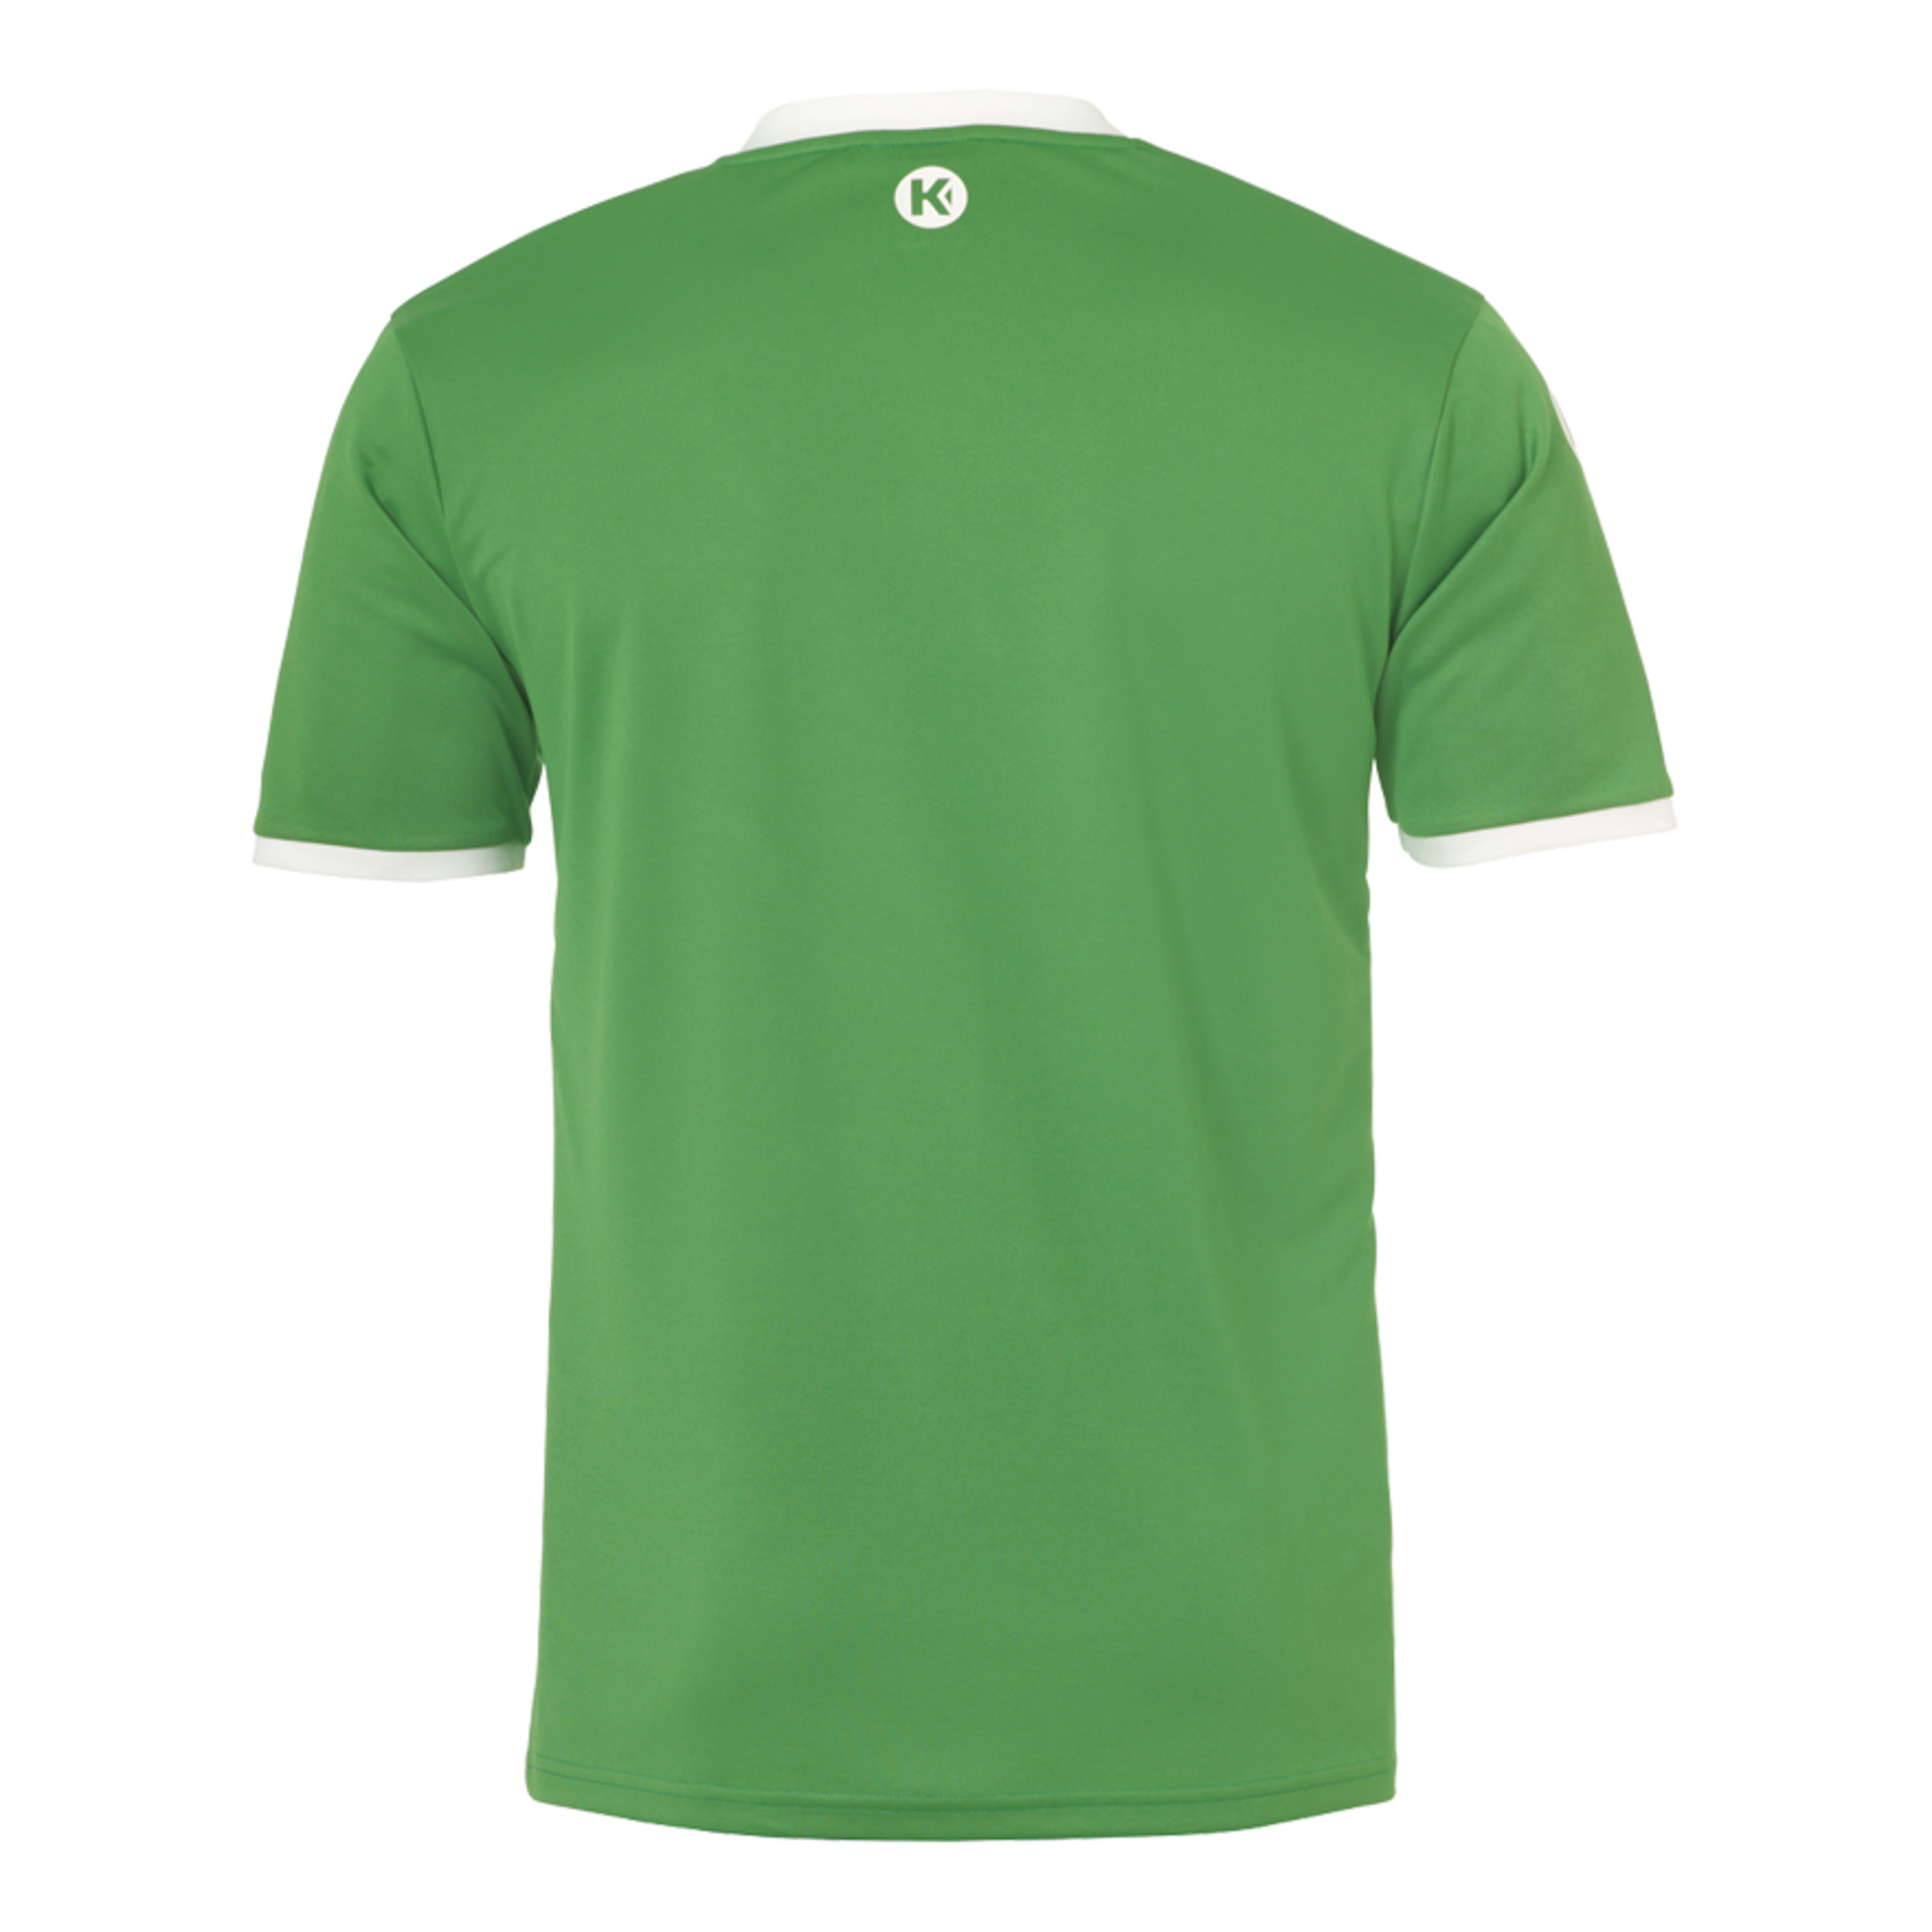 Curve Camiseta Verde/blanco Kempa